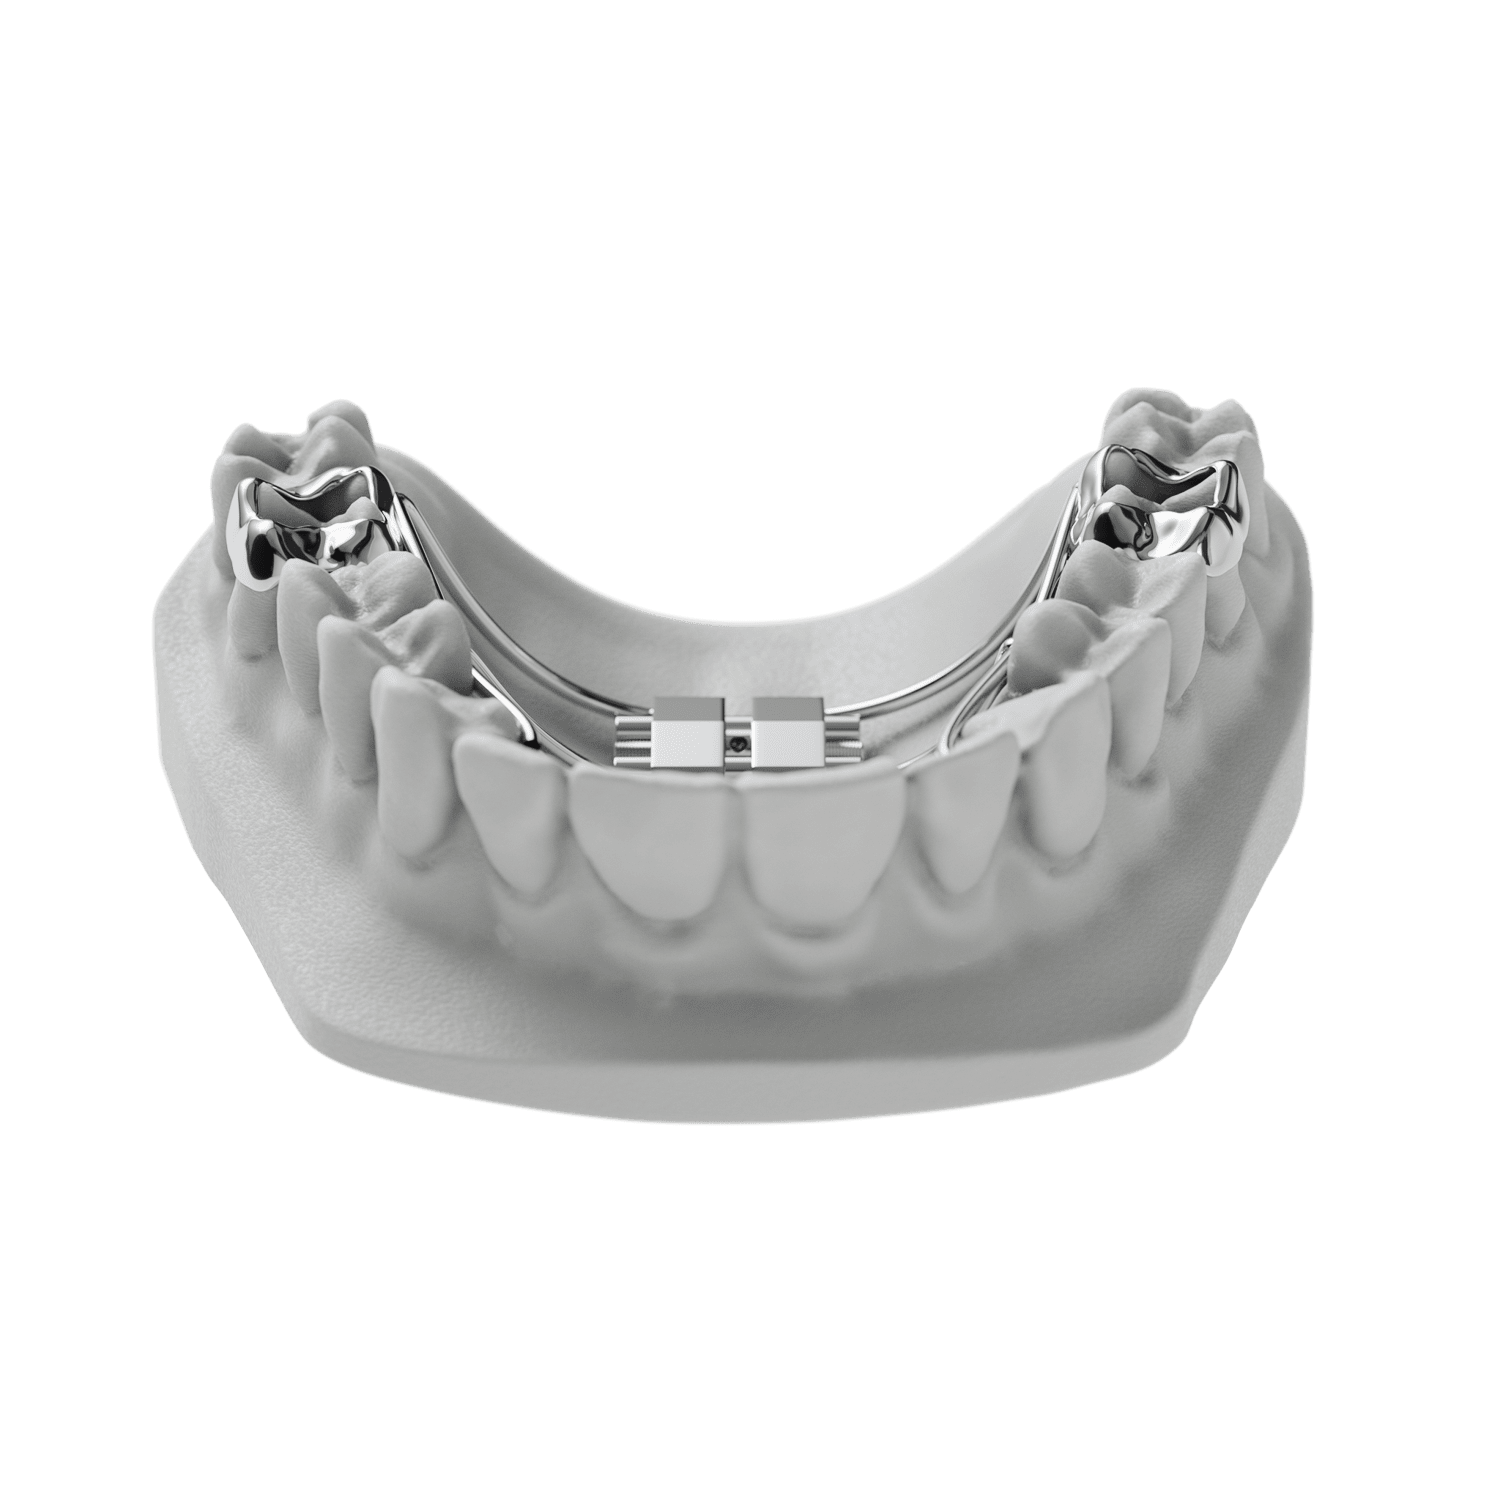 Palatal Expander - Janzen, Janzen & Chwa Orthodontics, Ltd